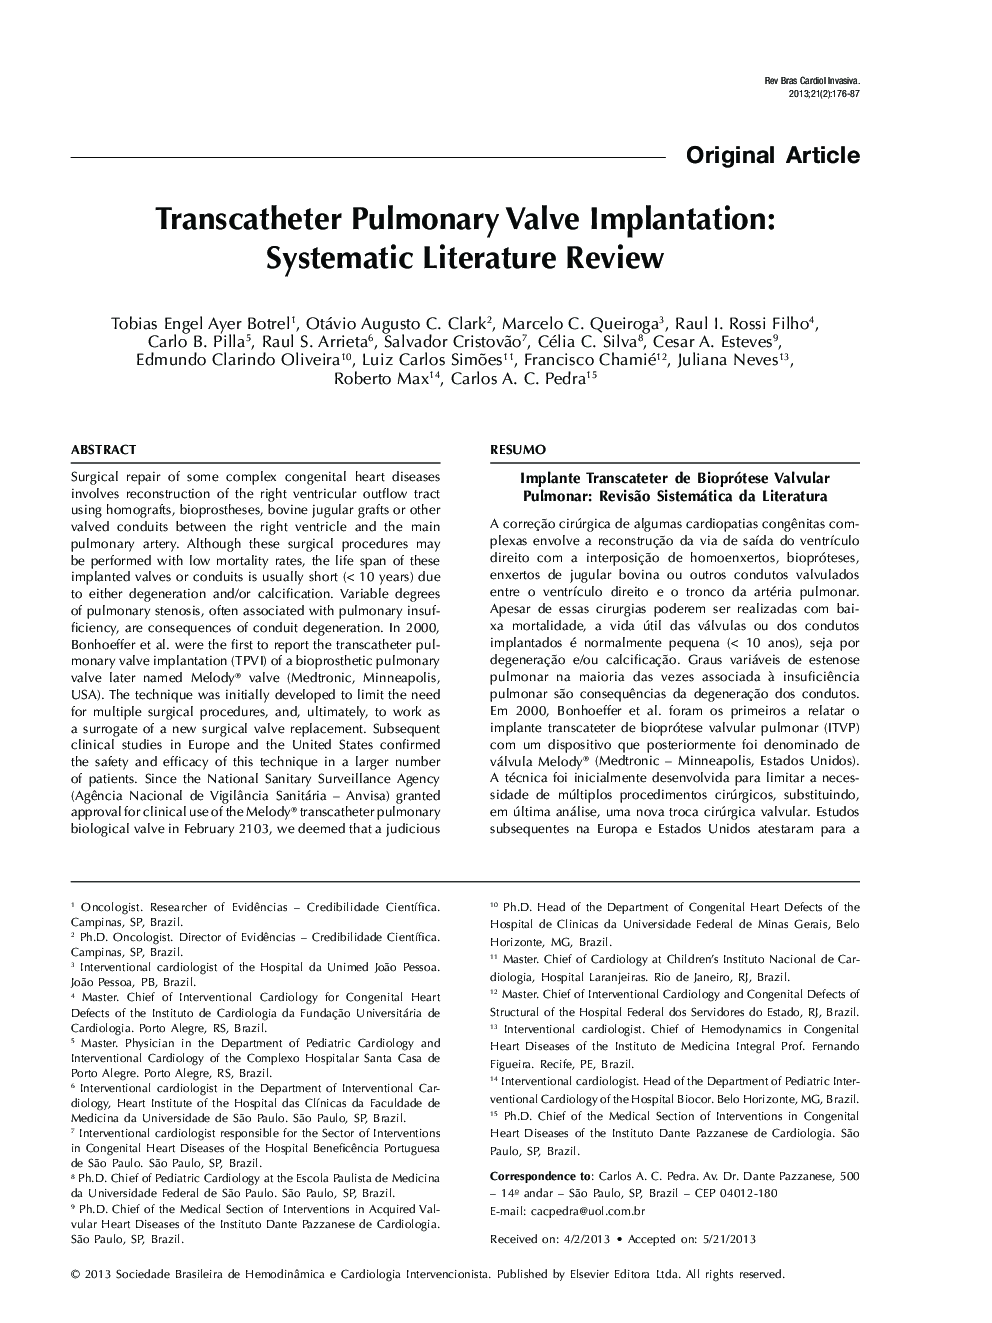 Transcatheter Pulmonary Valve Implantation: Systematic Literature Review